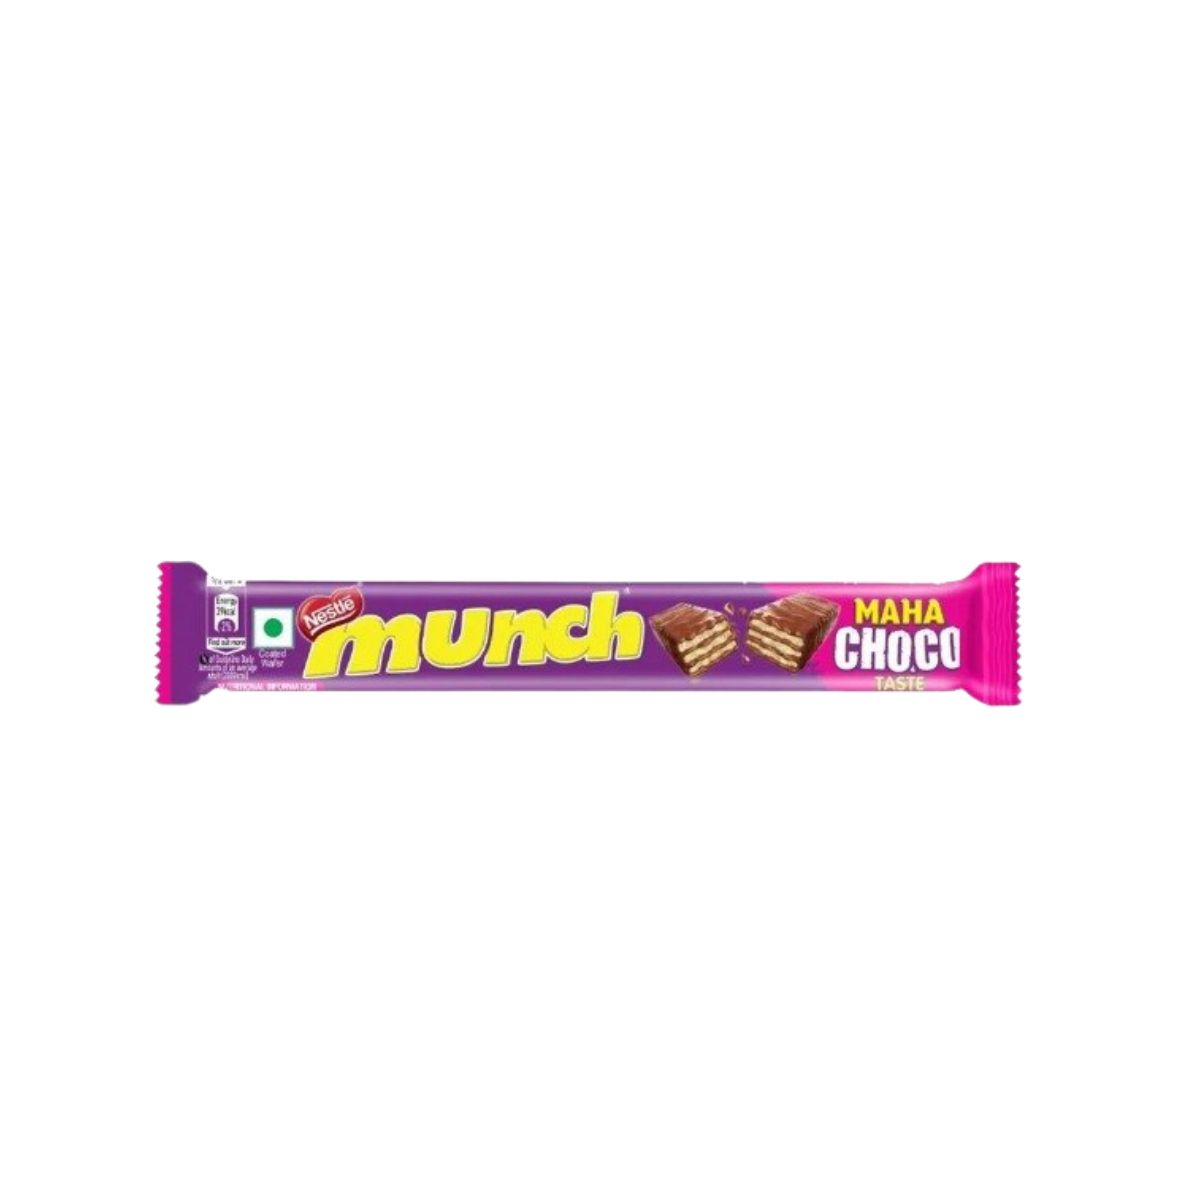 Nestle Munch Maha Choco Taste - 18g